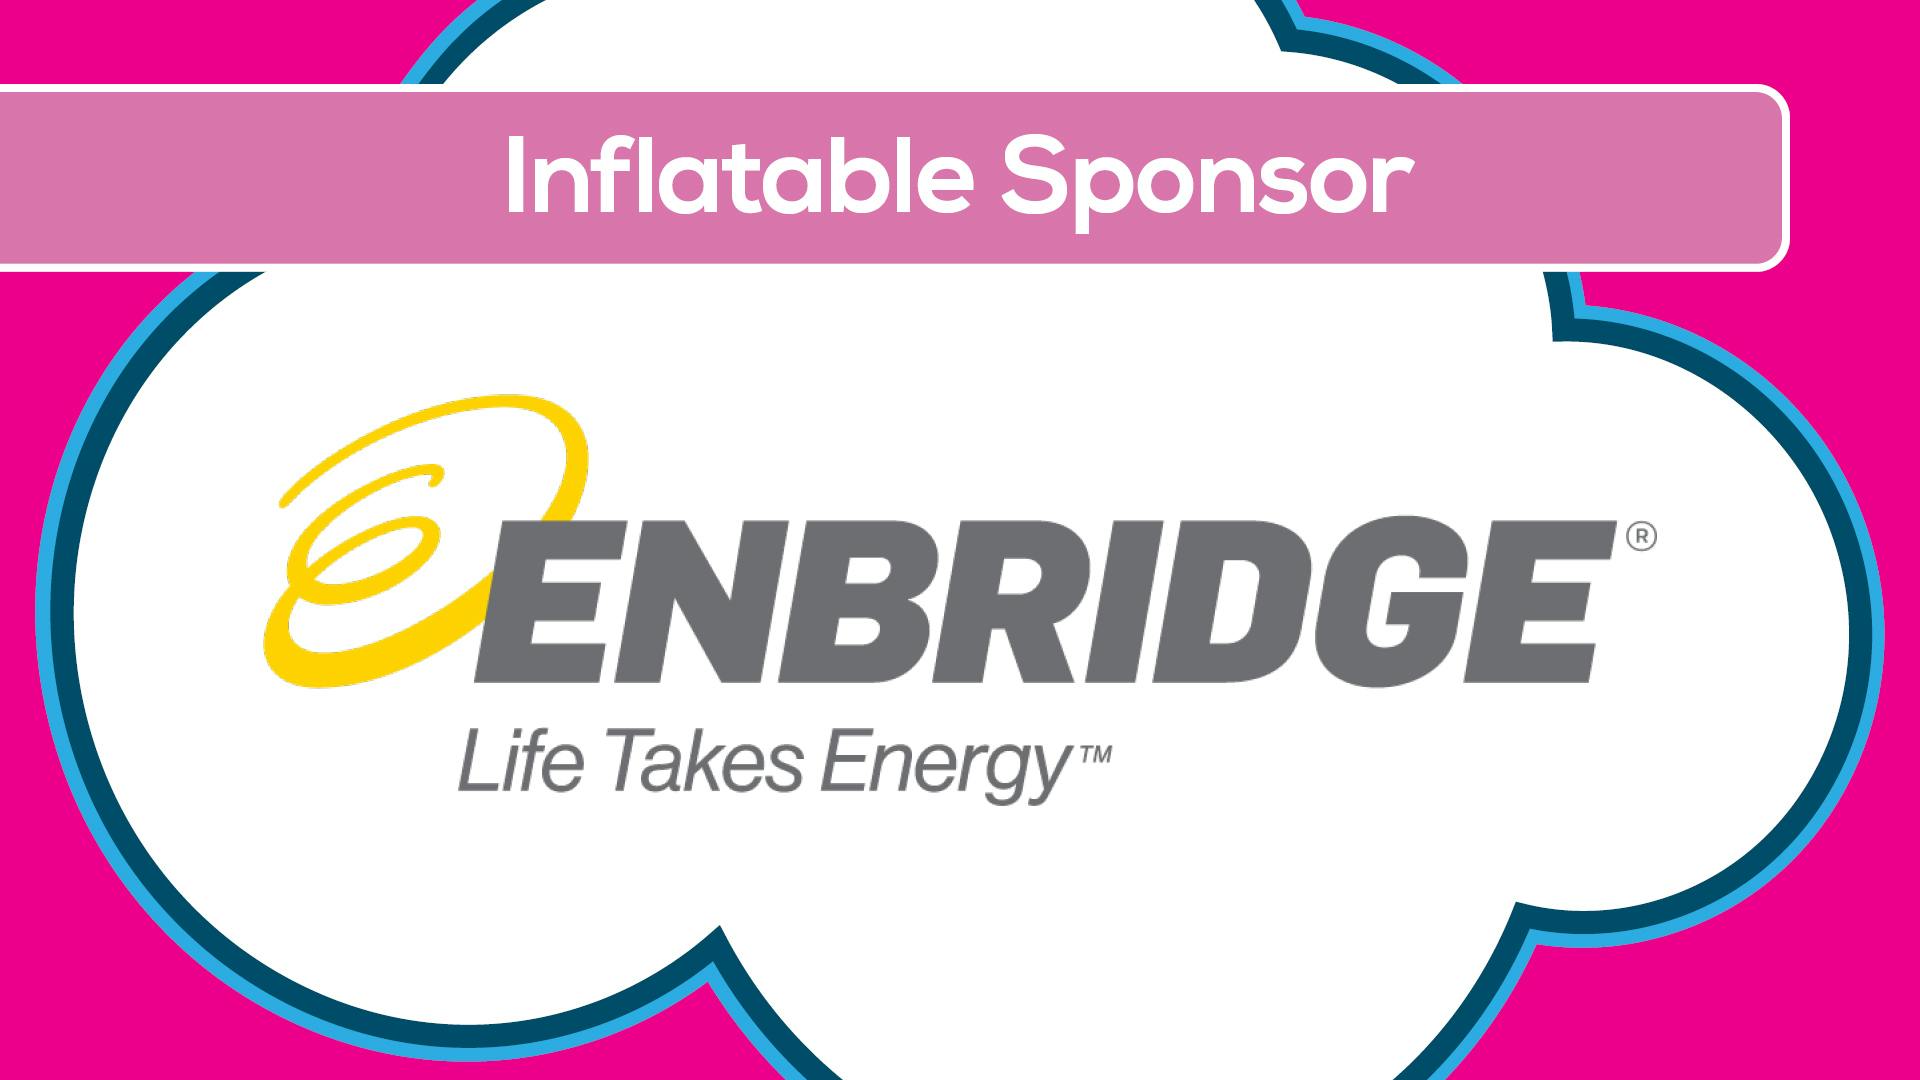 Enbridge - Inflatable Sponsor